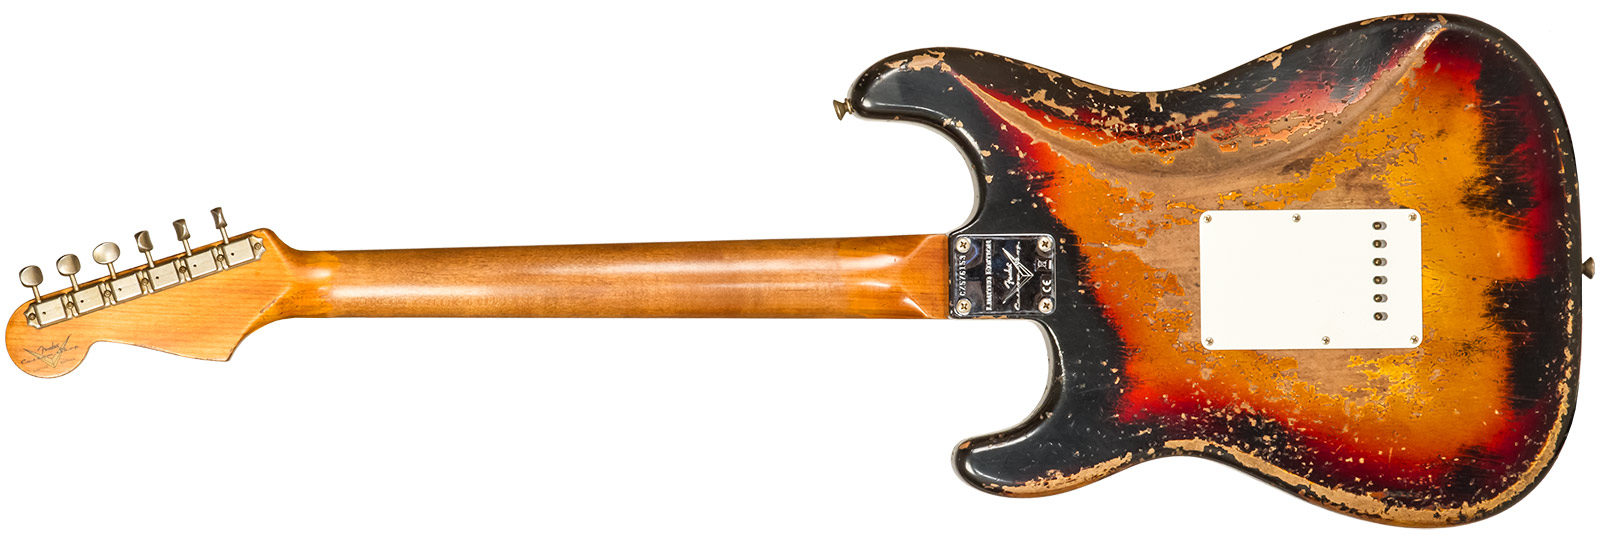 Fender Custom Shop Strat 1961 3s Trem Rw #cz576153 - Super Heavy Relic Black O. 3-color Sunburst - Str shape electric guitar - Variation 1